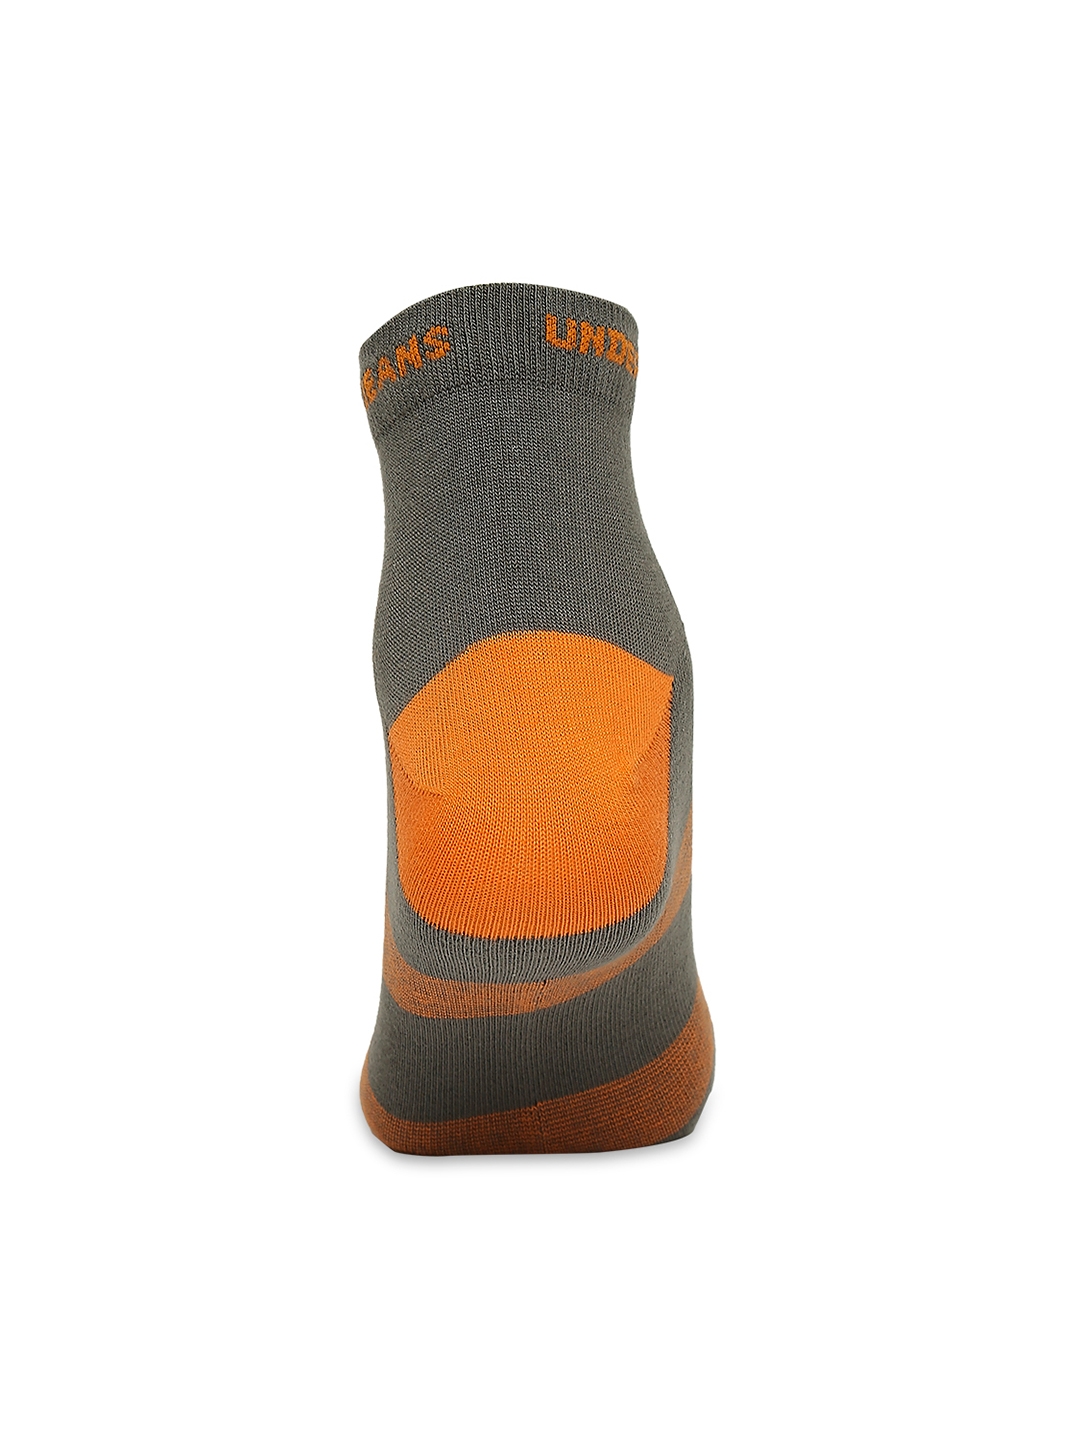 spykar | Underjeans by Spykar Premium Dark Grey & Navy Ankle Length Socks - Pack Of 2 5